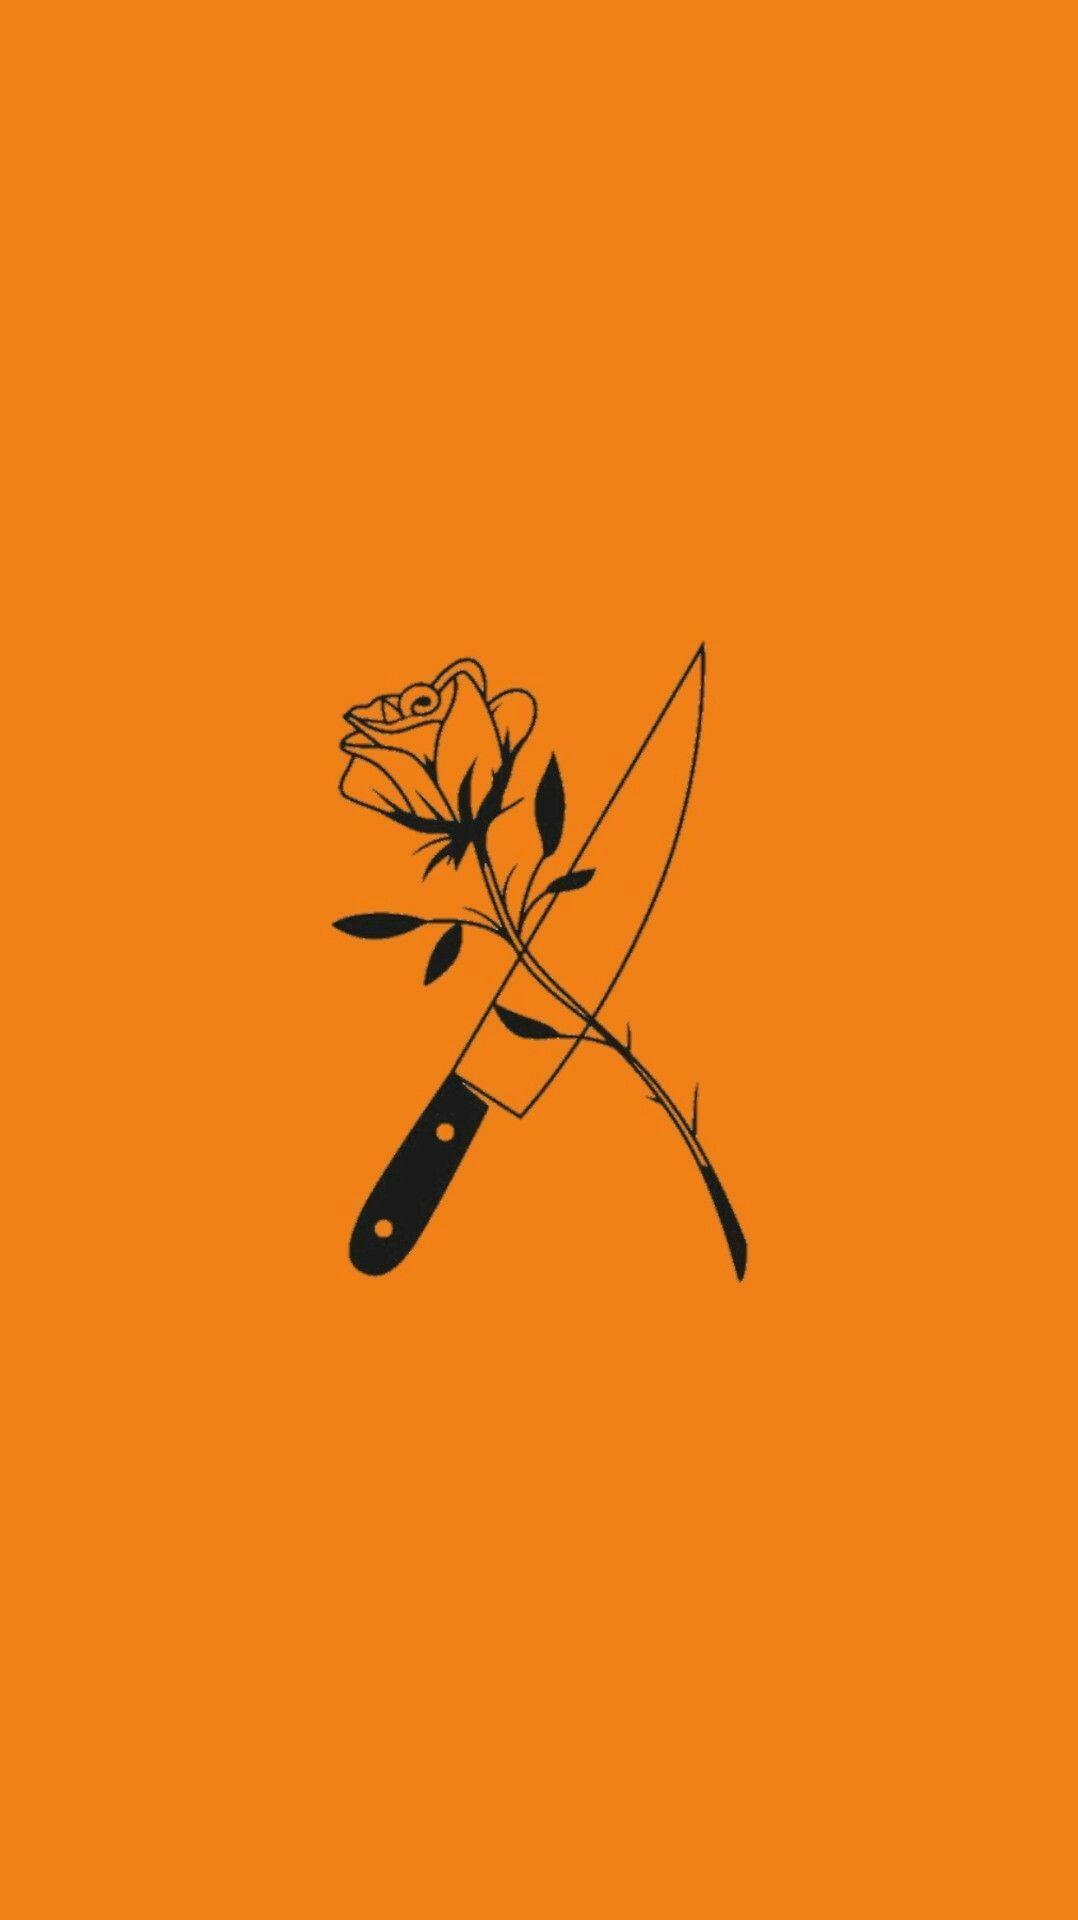 Aesthetic knife wallpaper for phone with orange background - Dark orange